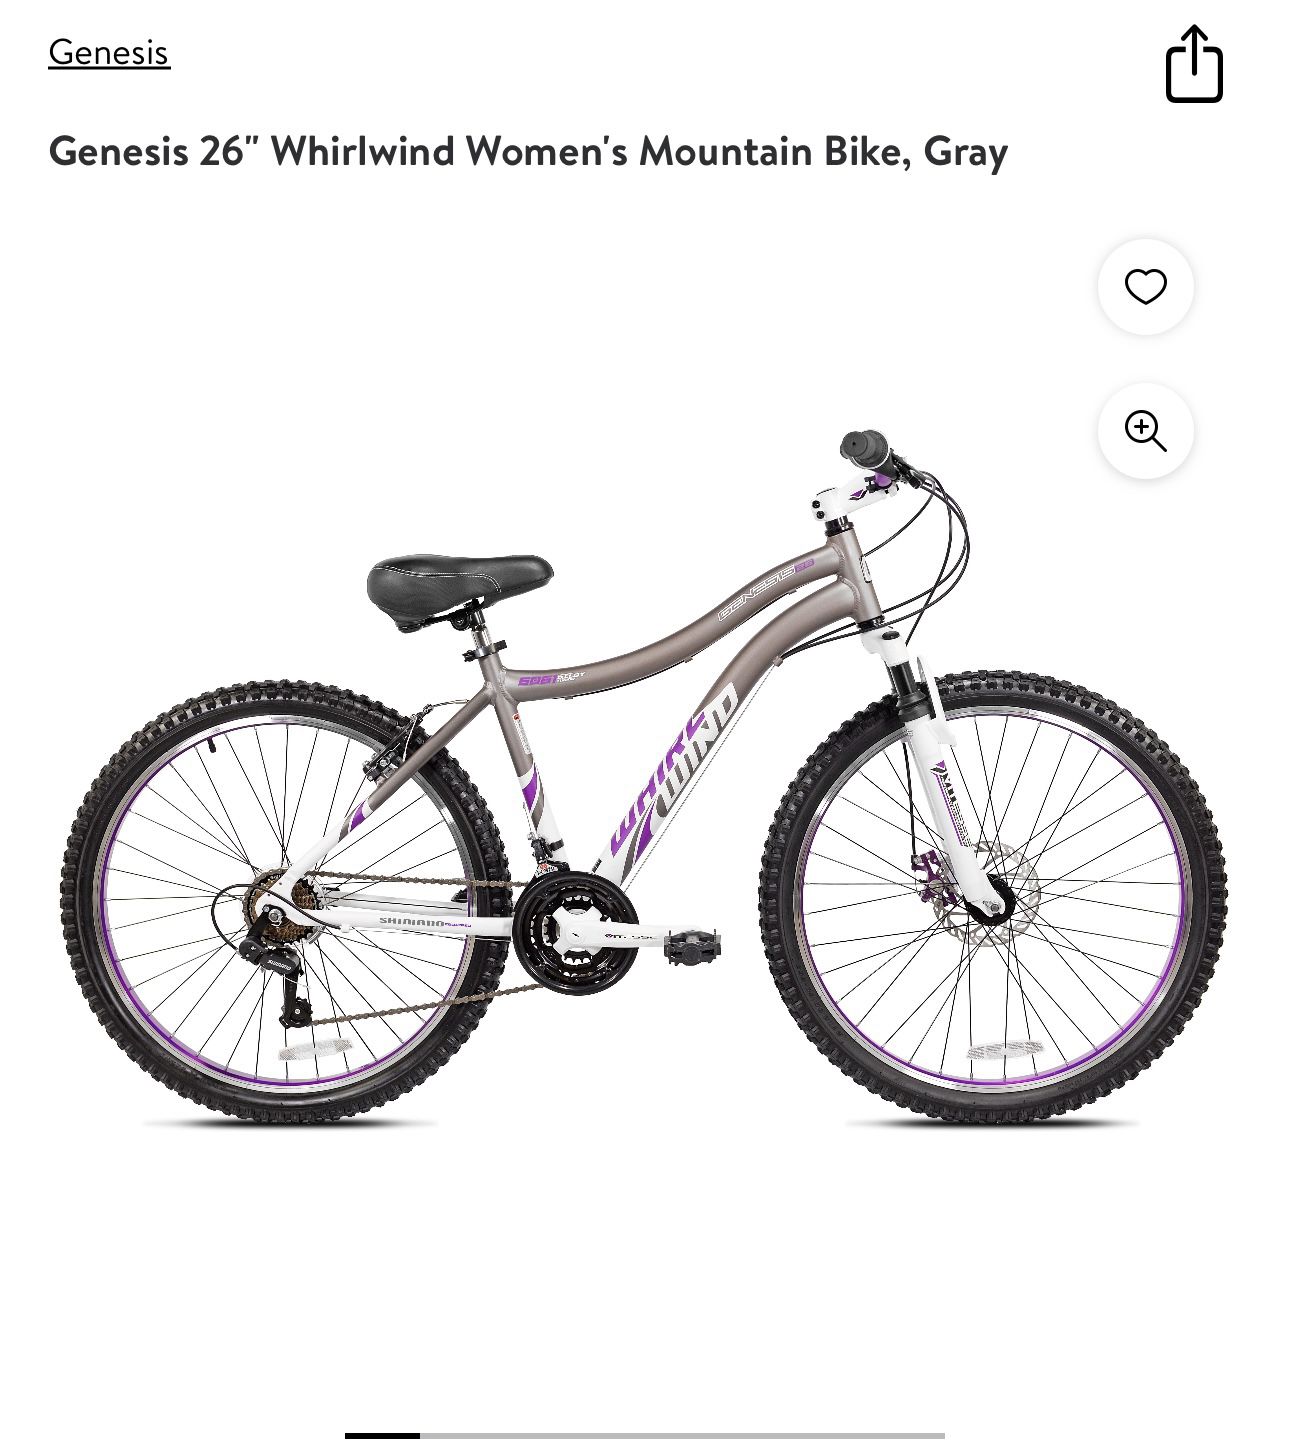 Genesis 26" Whirlwind Women's Mountain Bike (Gray)